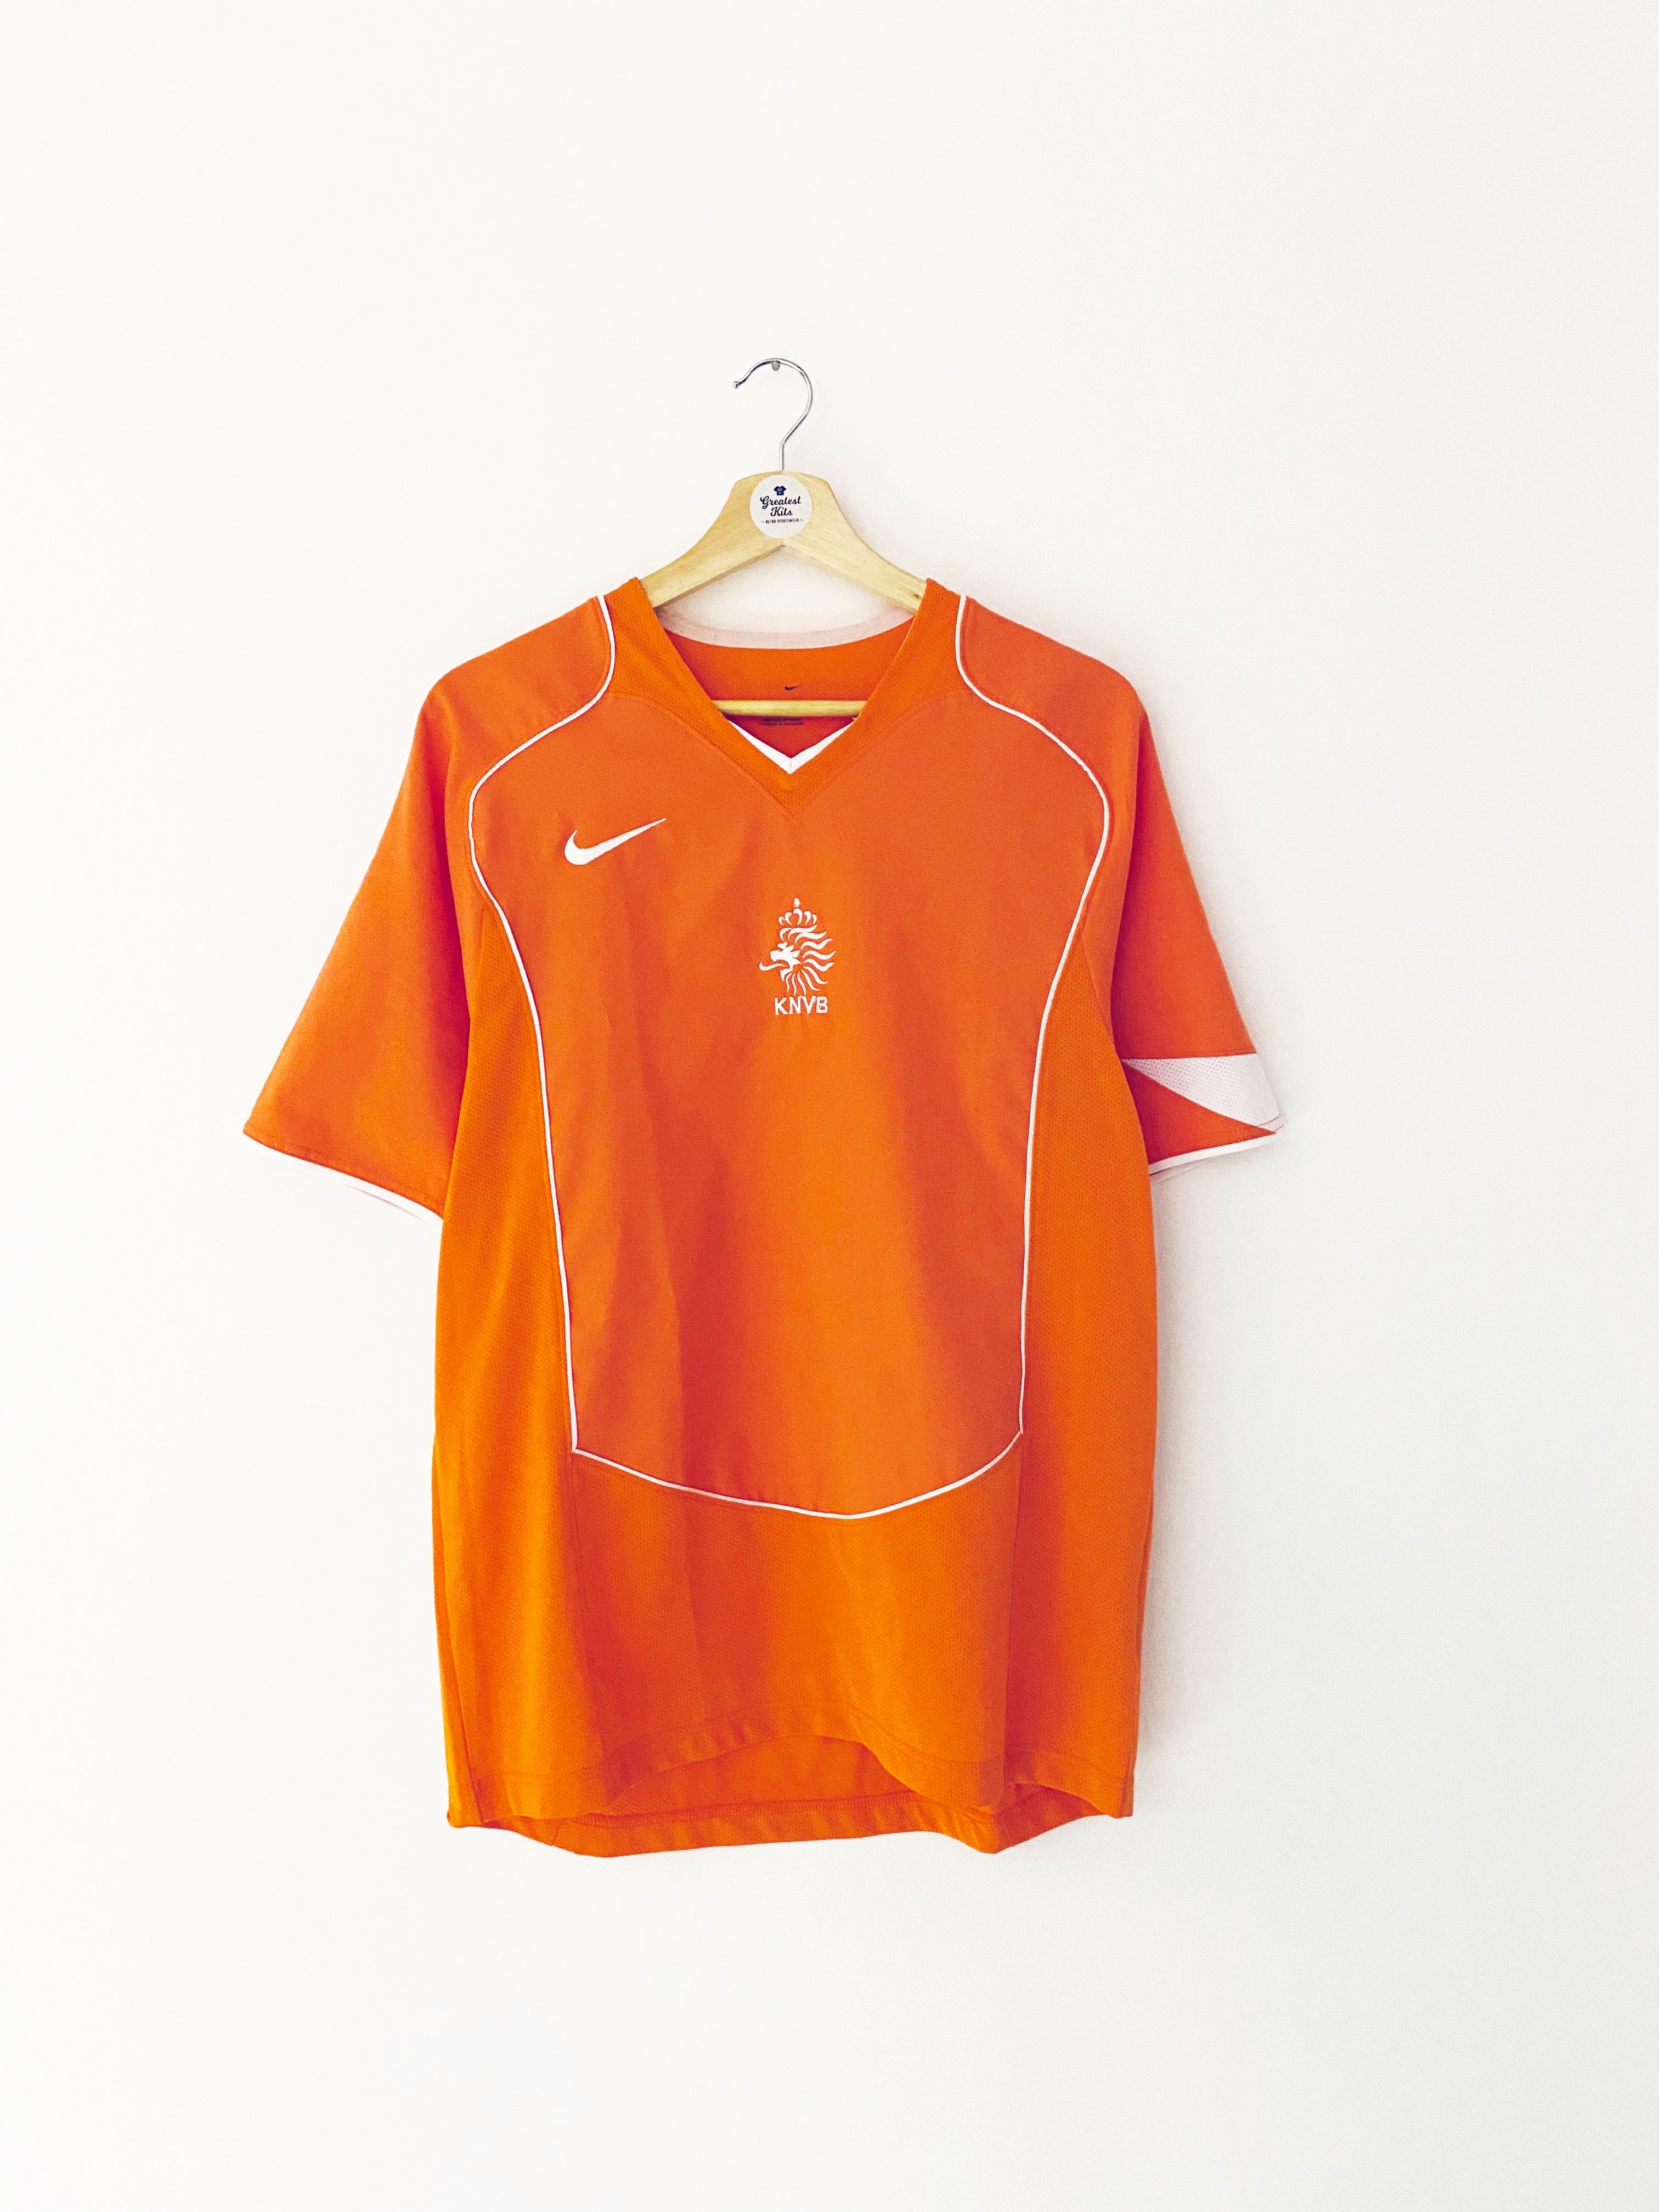 2004/06 Holland Home Shirt (S) 9/10